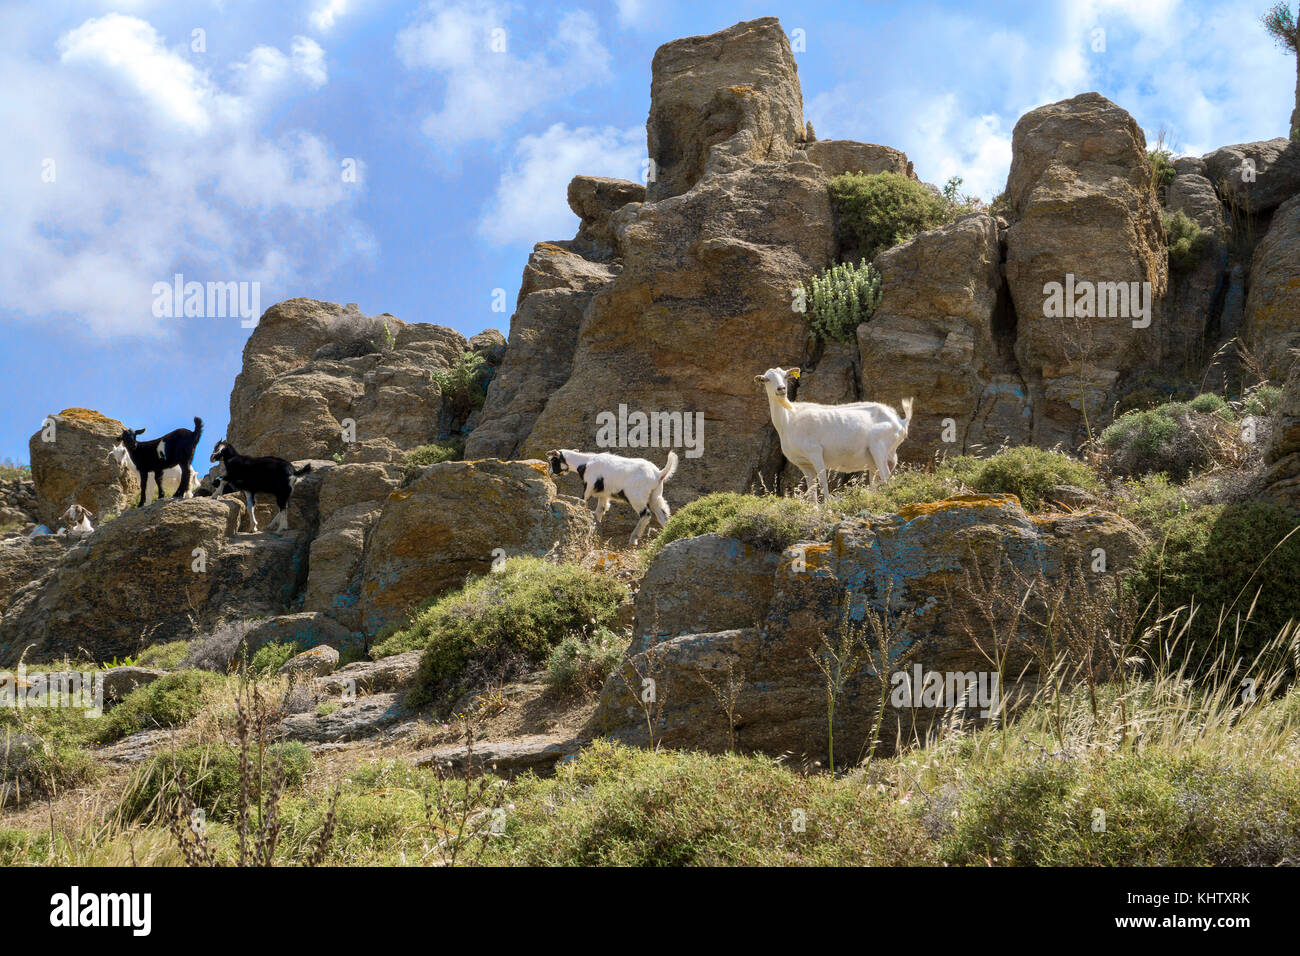 Caprini (Capra hircus) sulle rocce, MYKONOS Isola, Cicladi, Egeo, Grecia Foto Stock